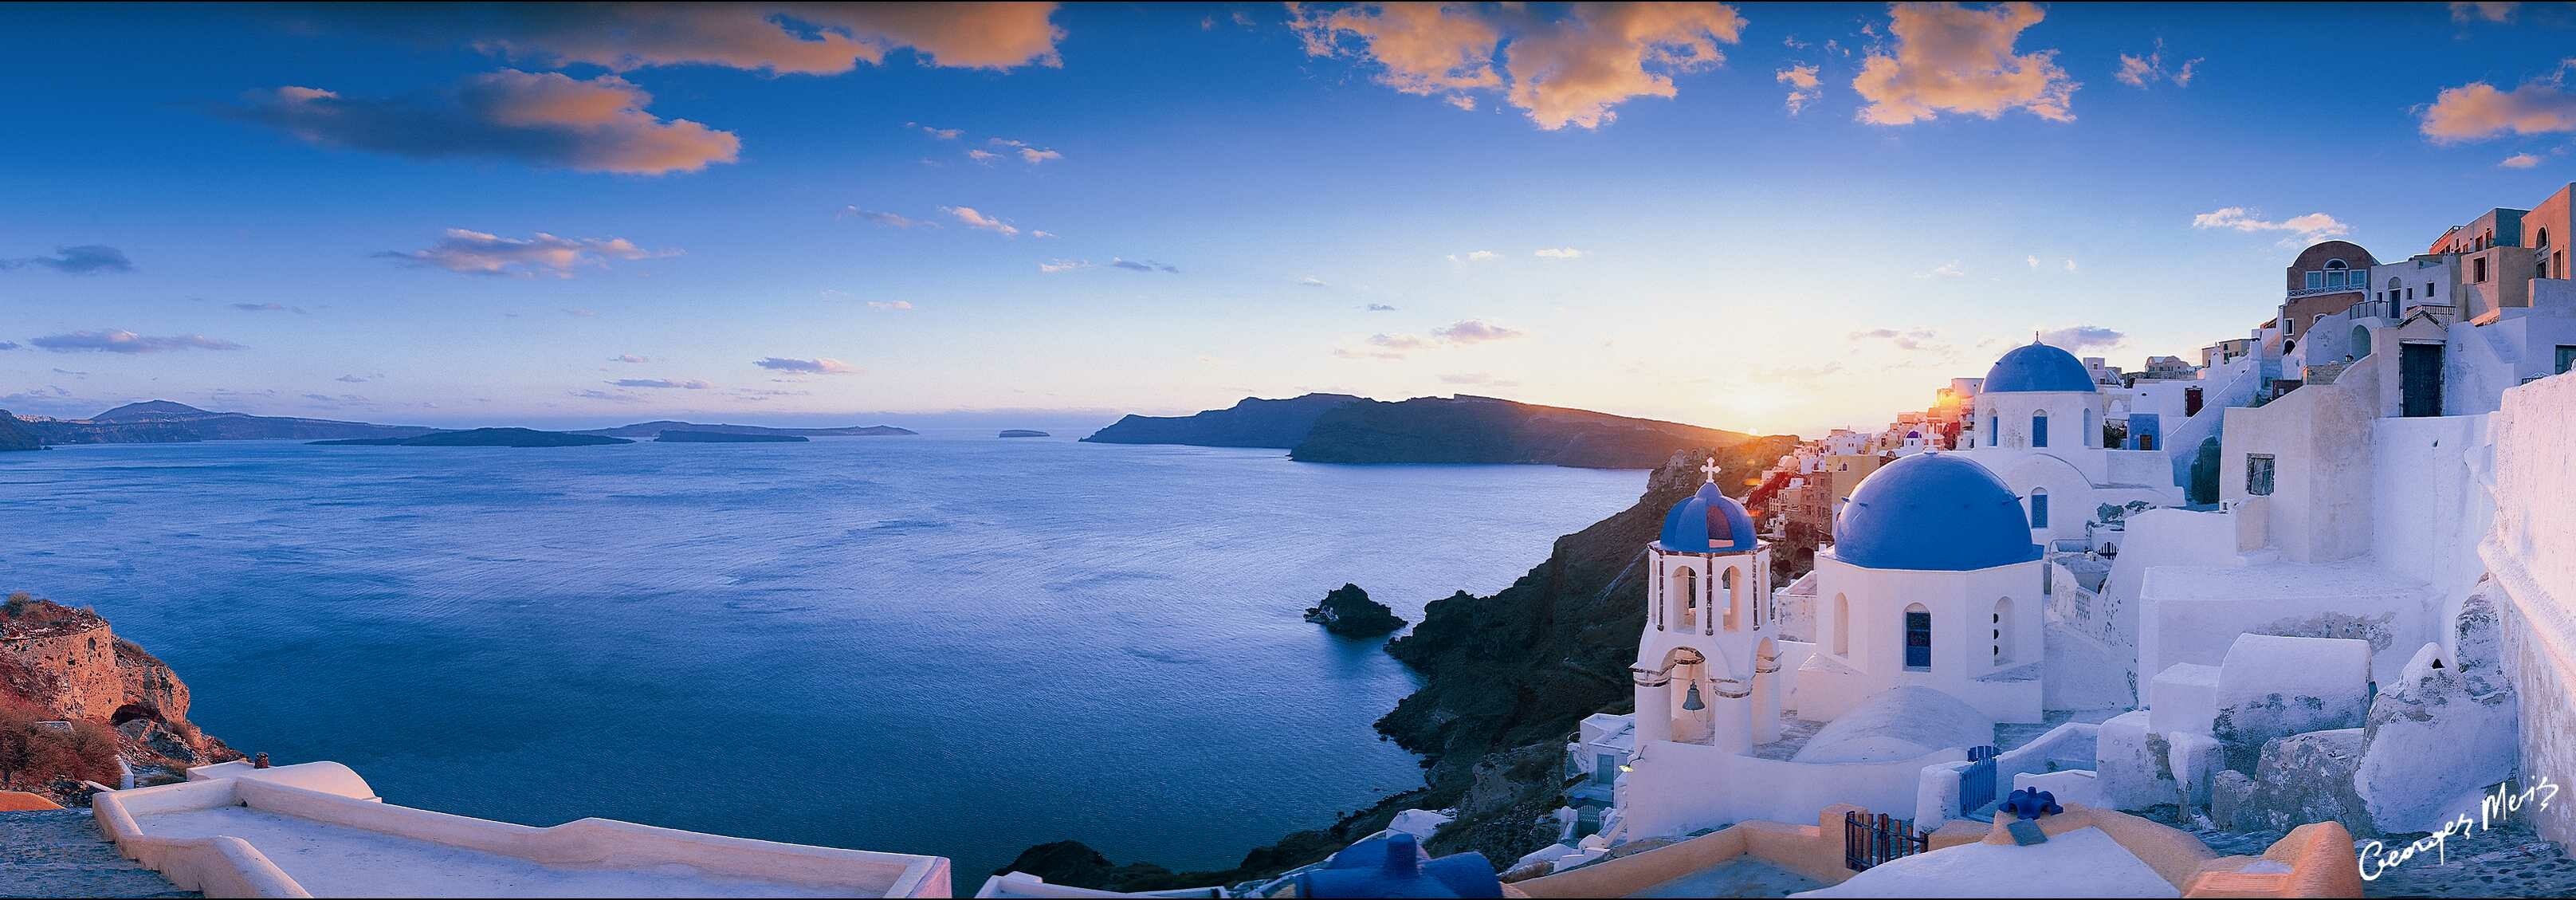 Blue Domes of Oia, Santorini, Greek paradise, Postcard-worthy scenery, 3240x1130 Dual Screen Desktop